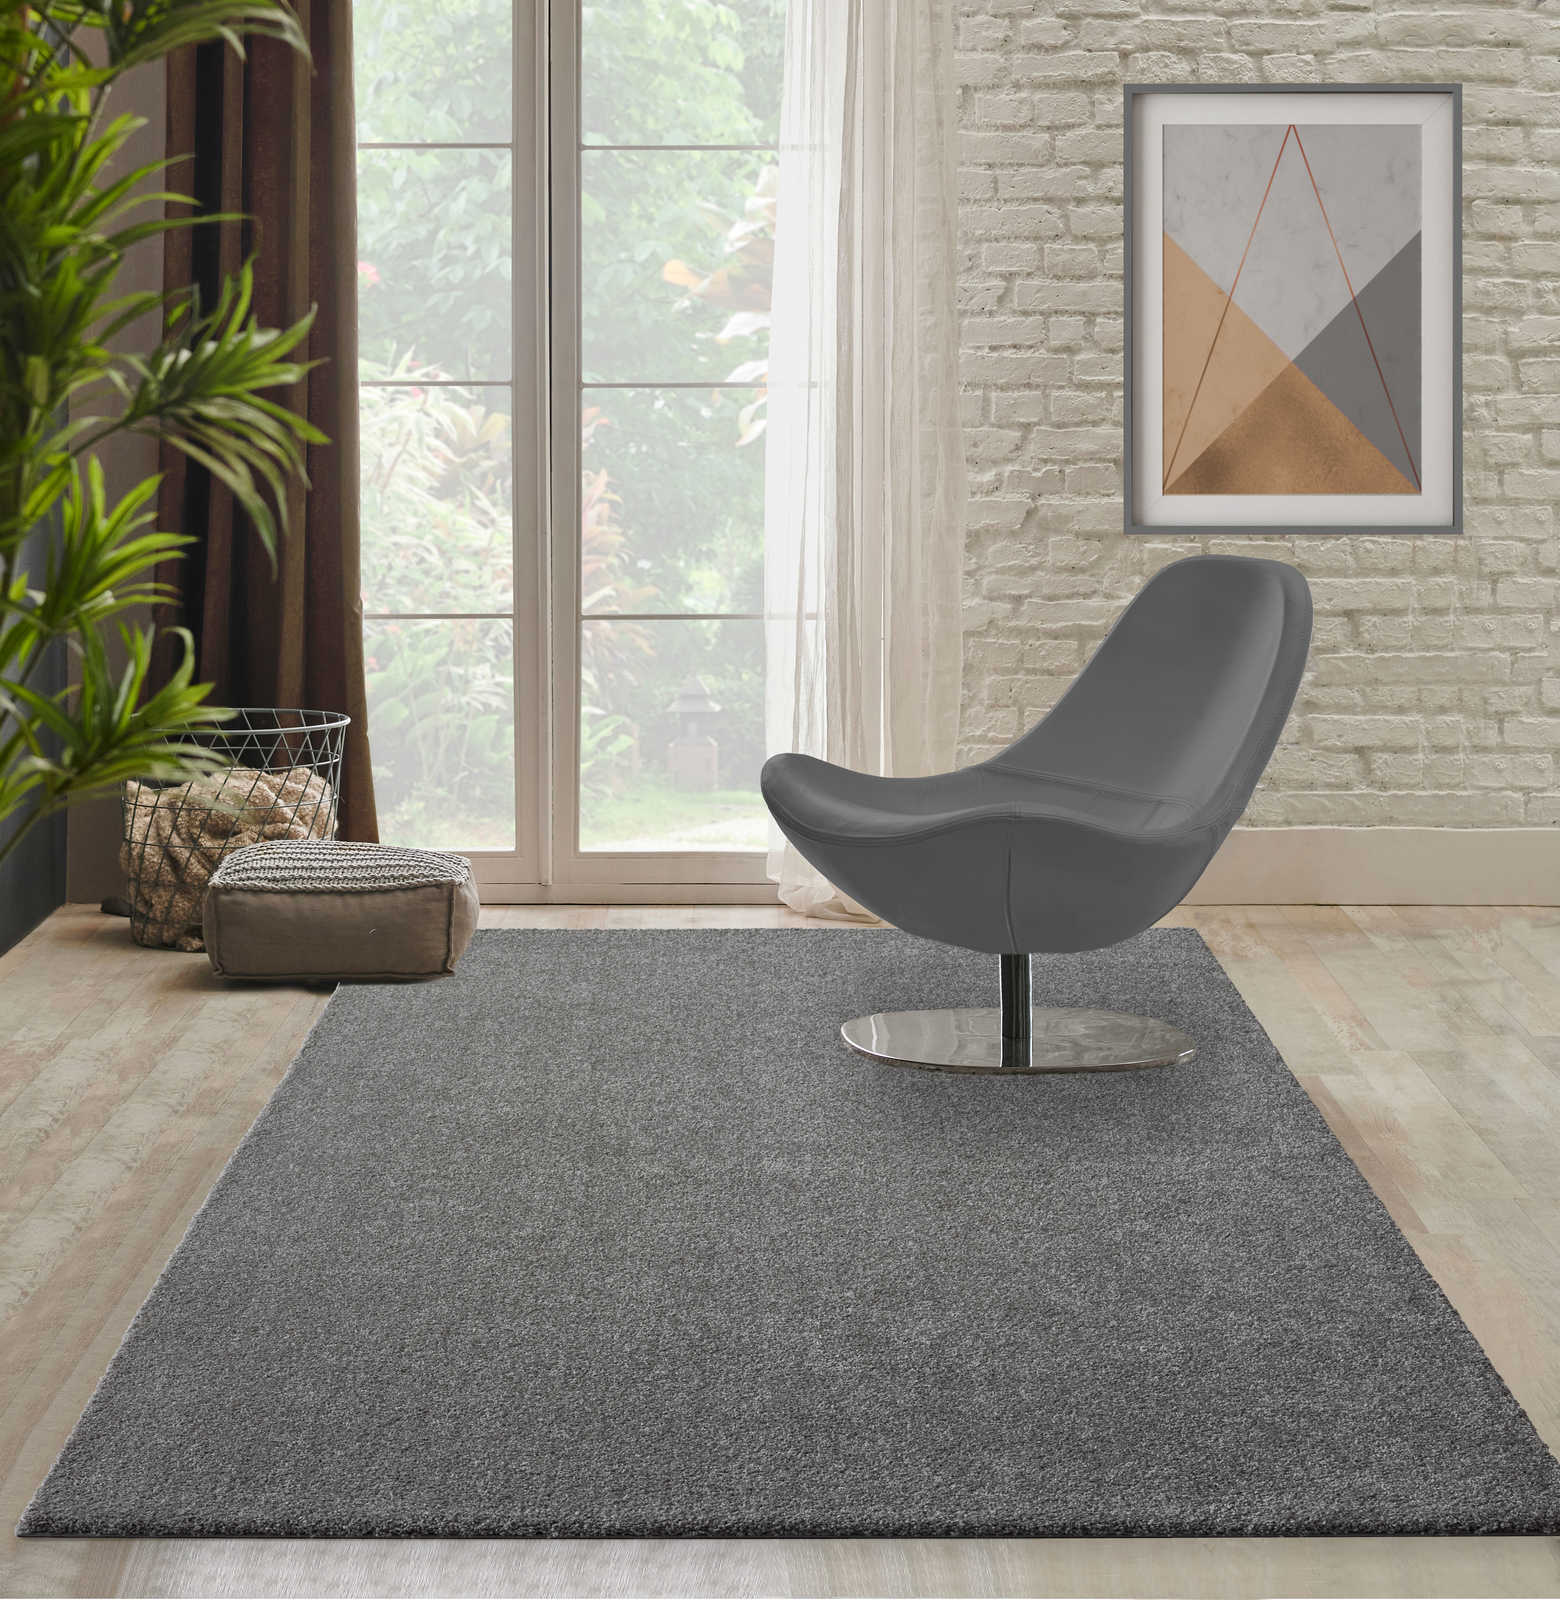 Fluffy short pile carpet in grey - 110 x 60 cm
